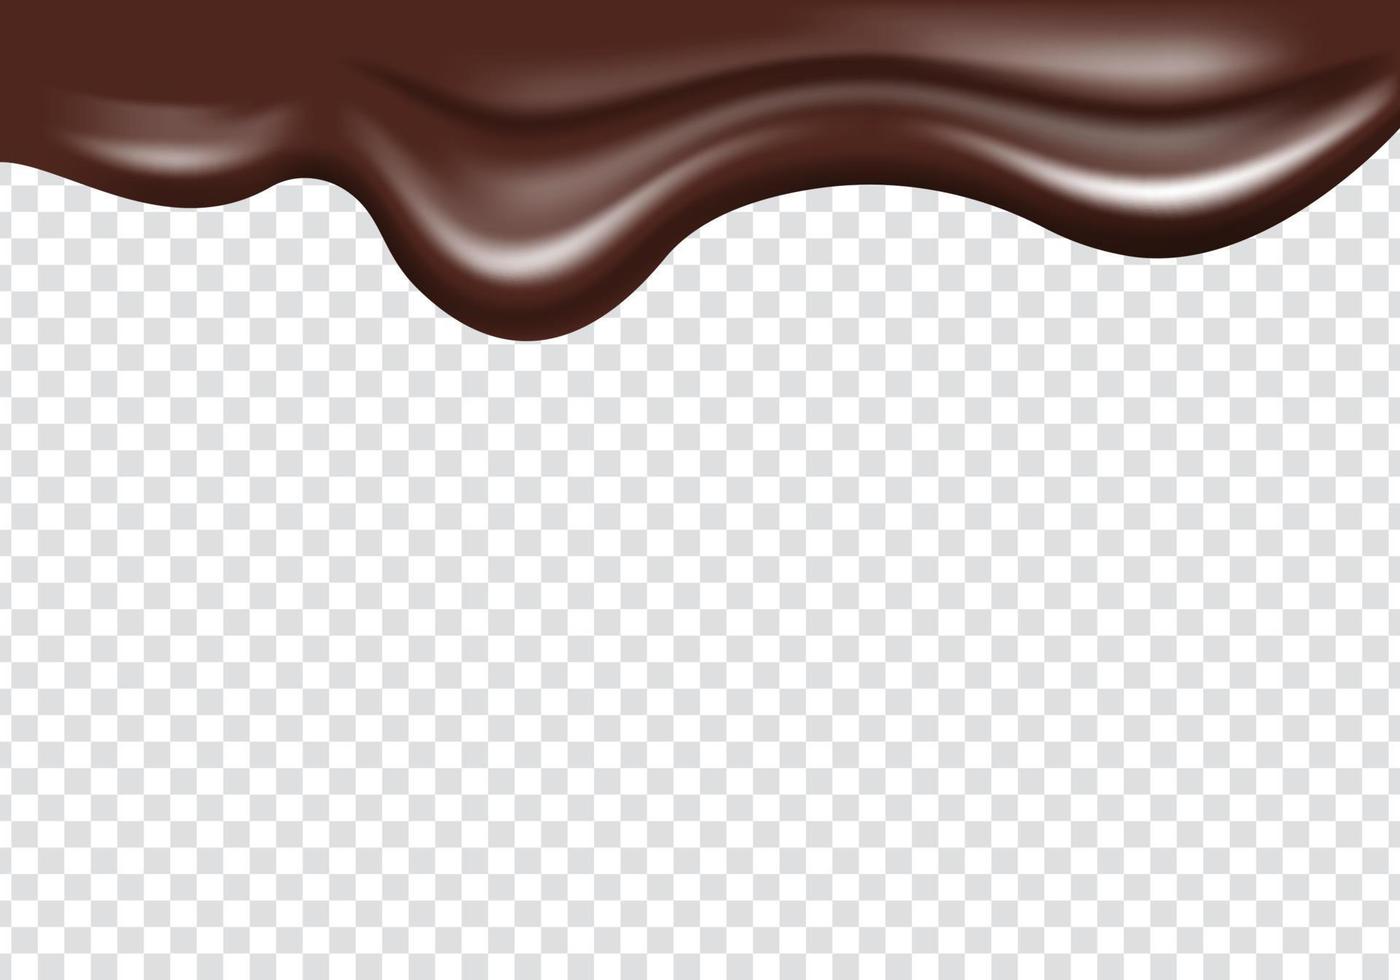 realistisch smelten donker chocola vloeistof vloeiende van top. top grens chocola gesmolten decoratie achtergrond vector element